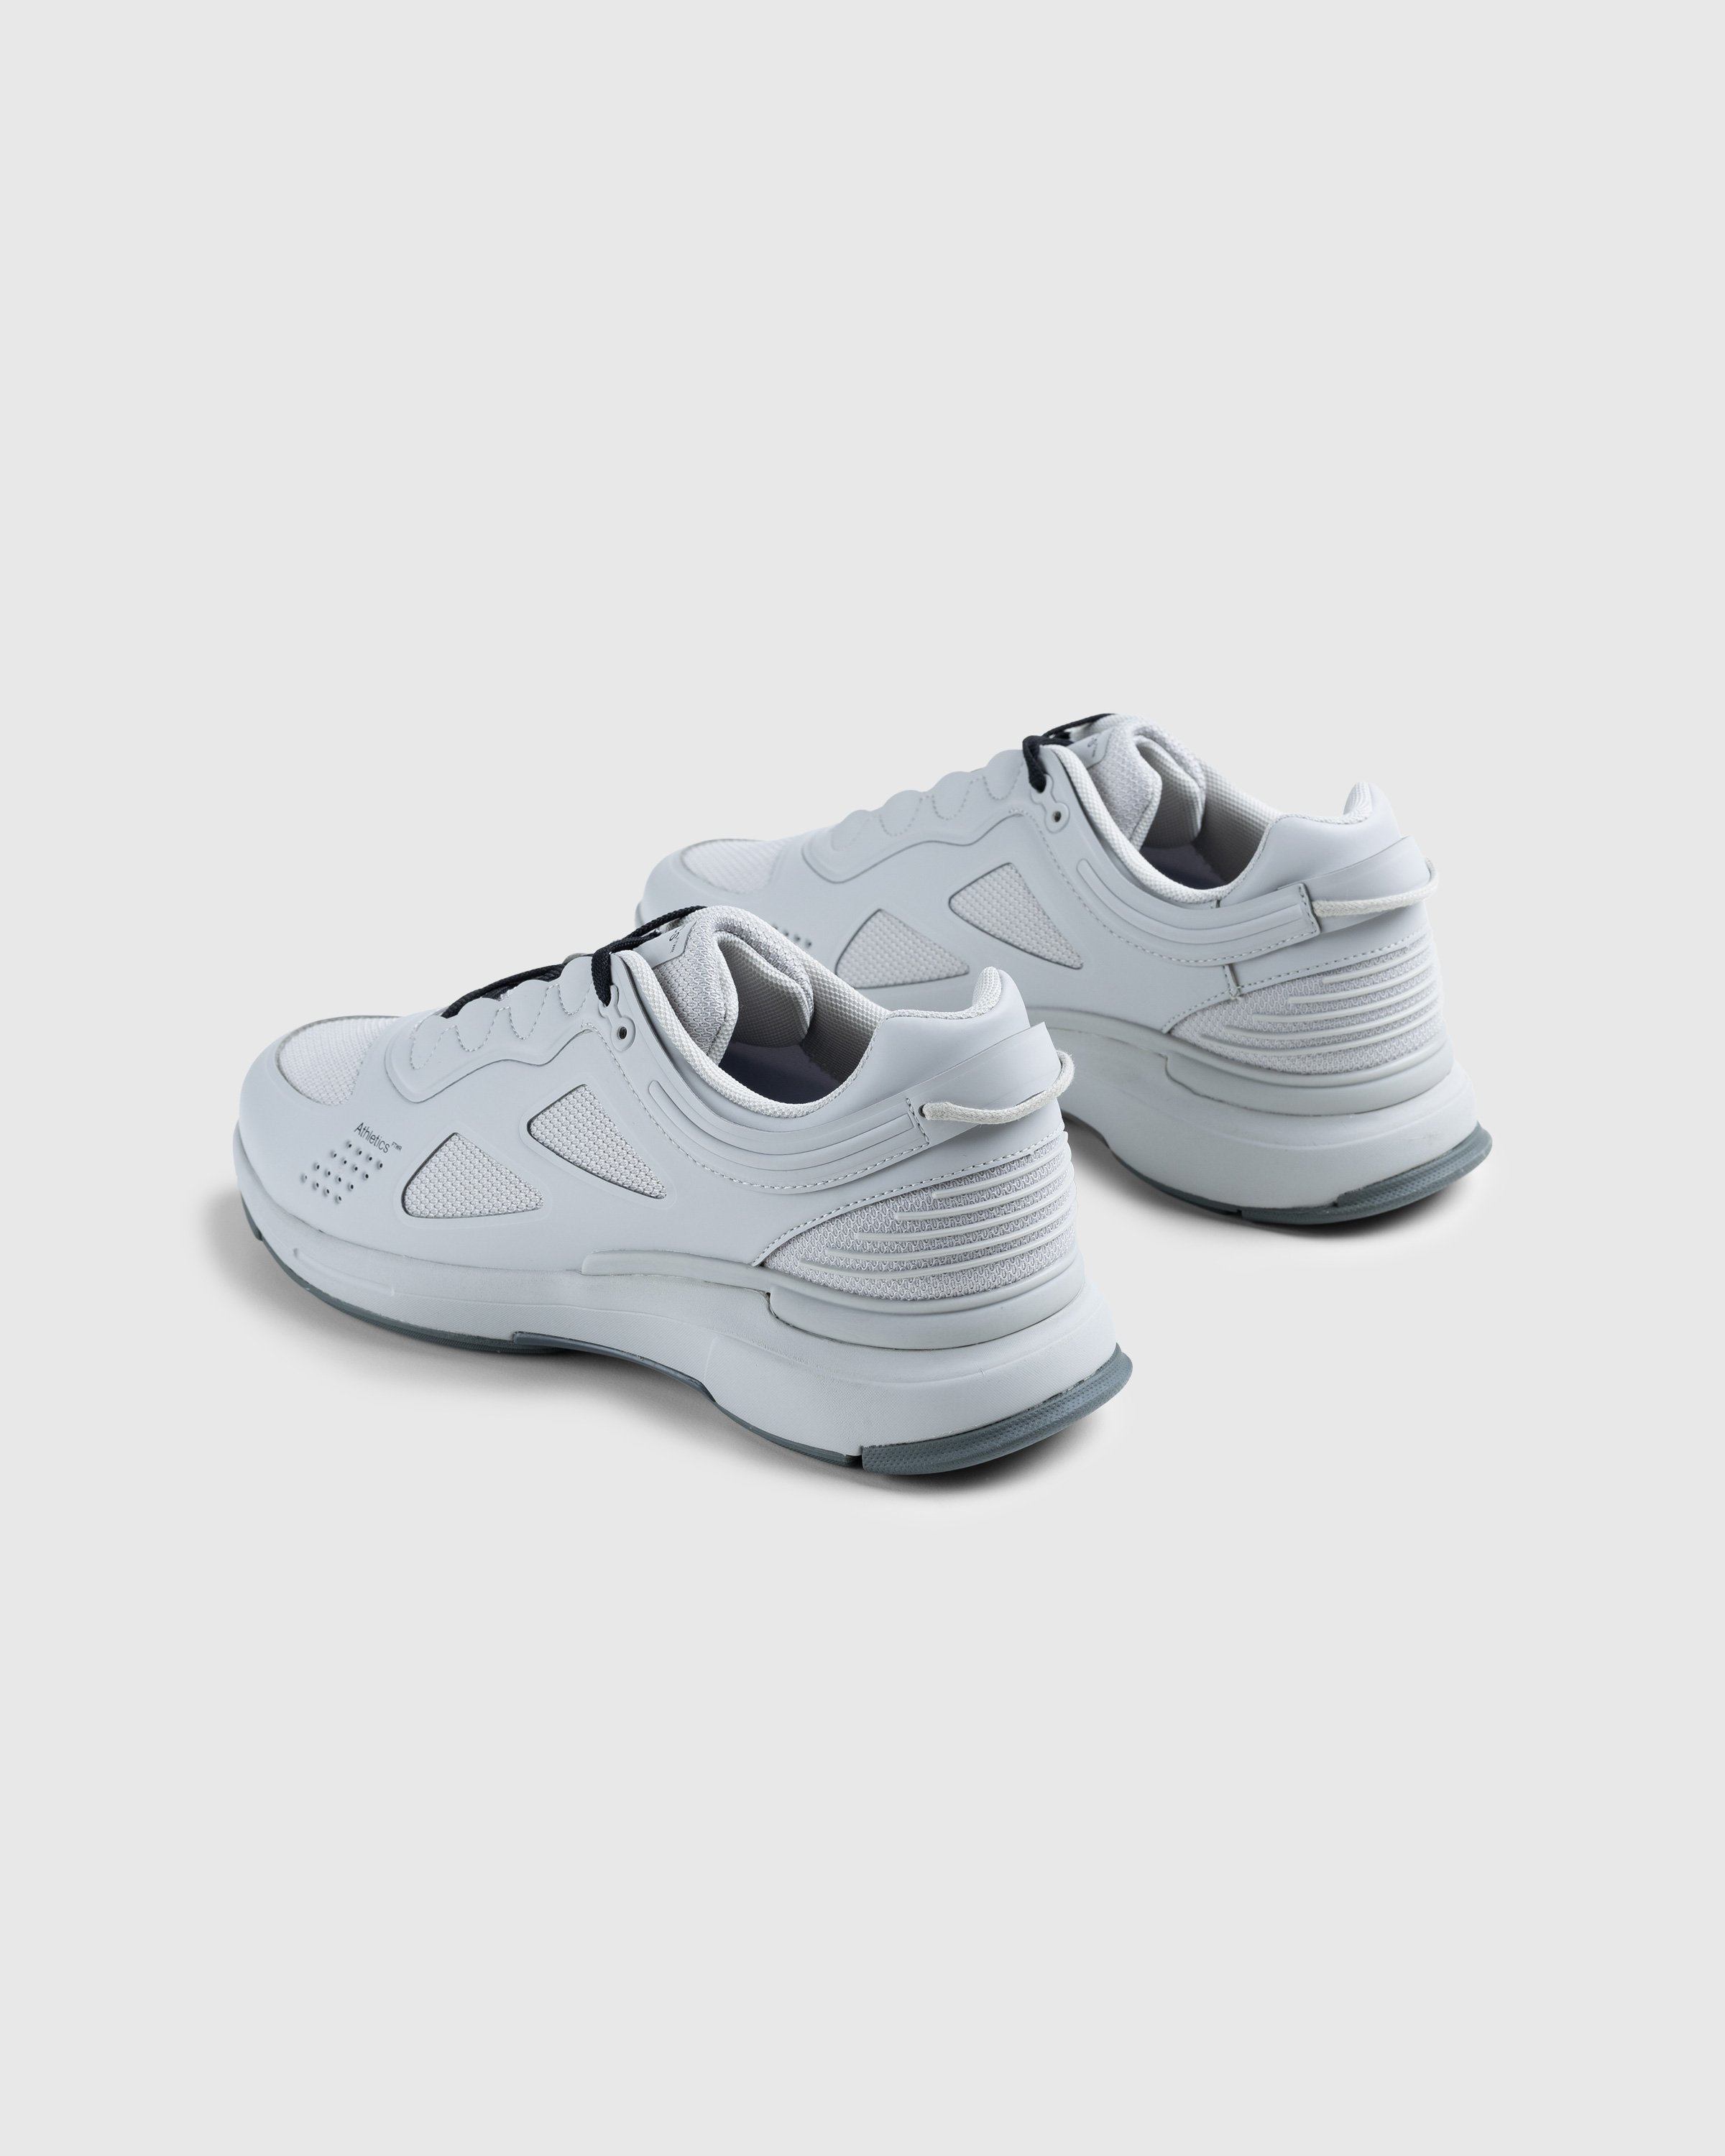 Athletics Footwear - One.2 Clay - Footwear - Grey - Image 4